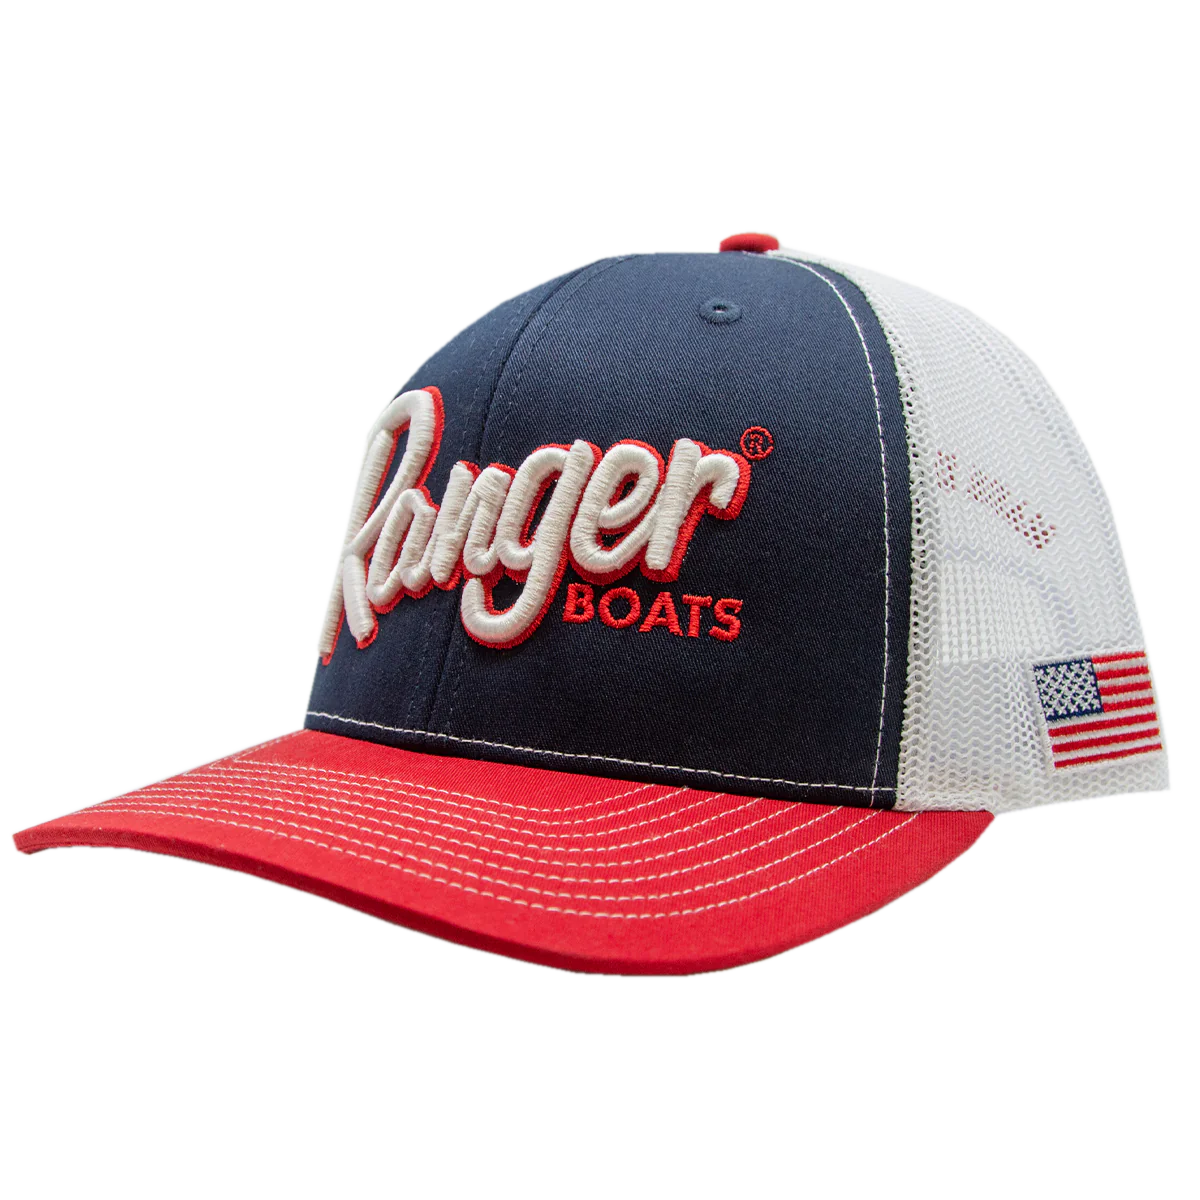 Ranger American Flag Patch Cap